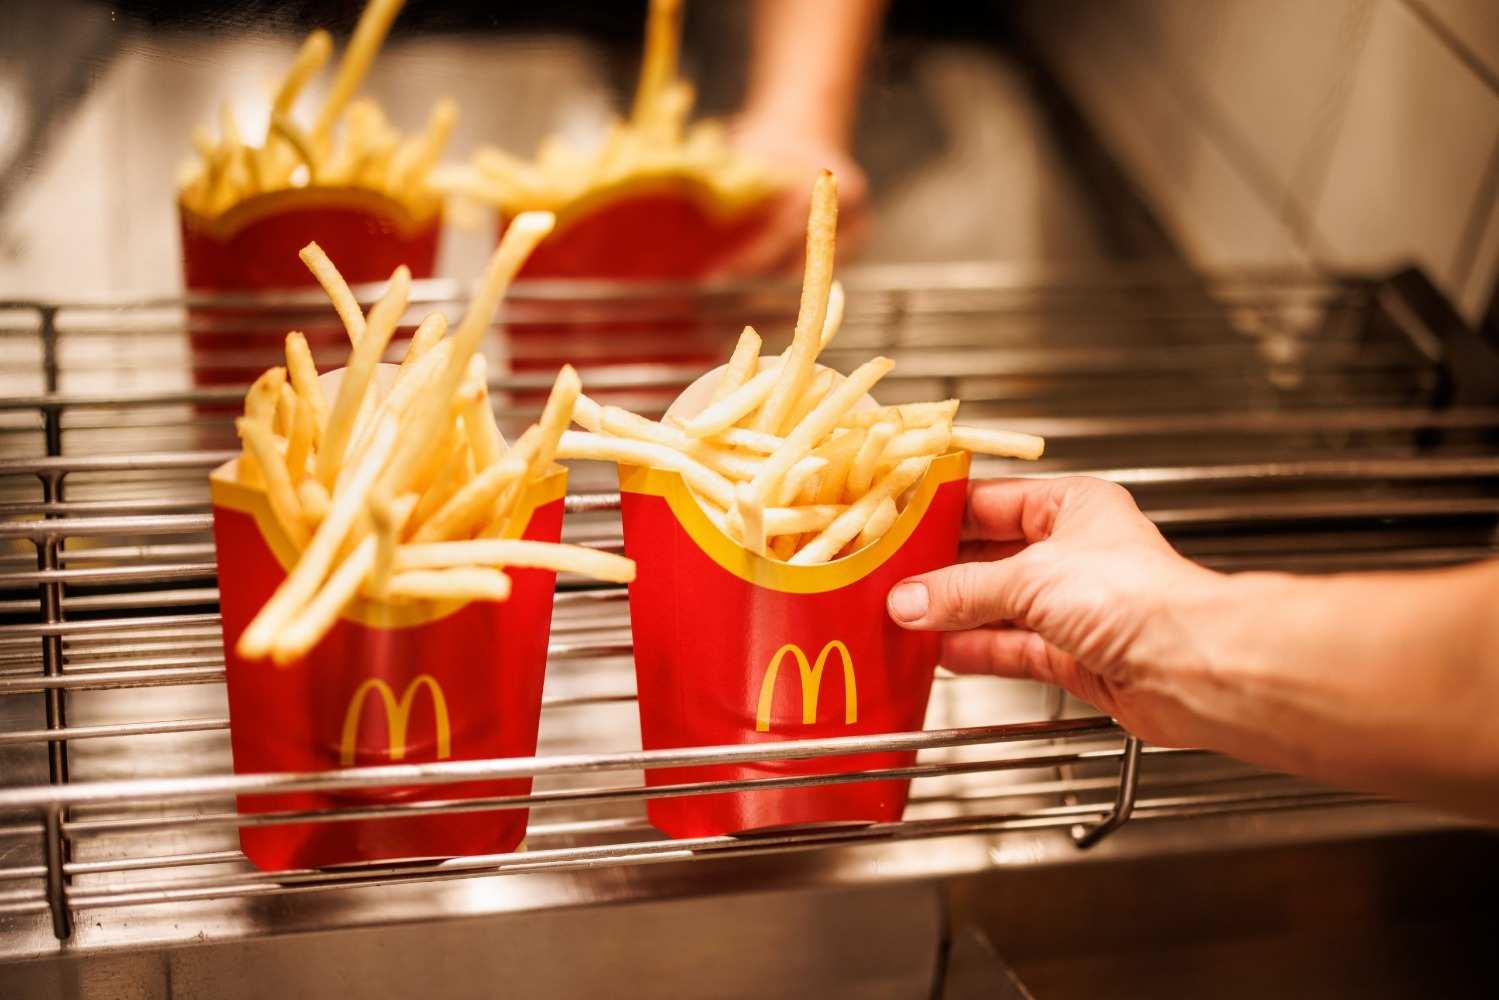 Mcdonald's free fries.jpg